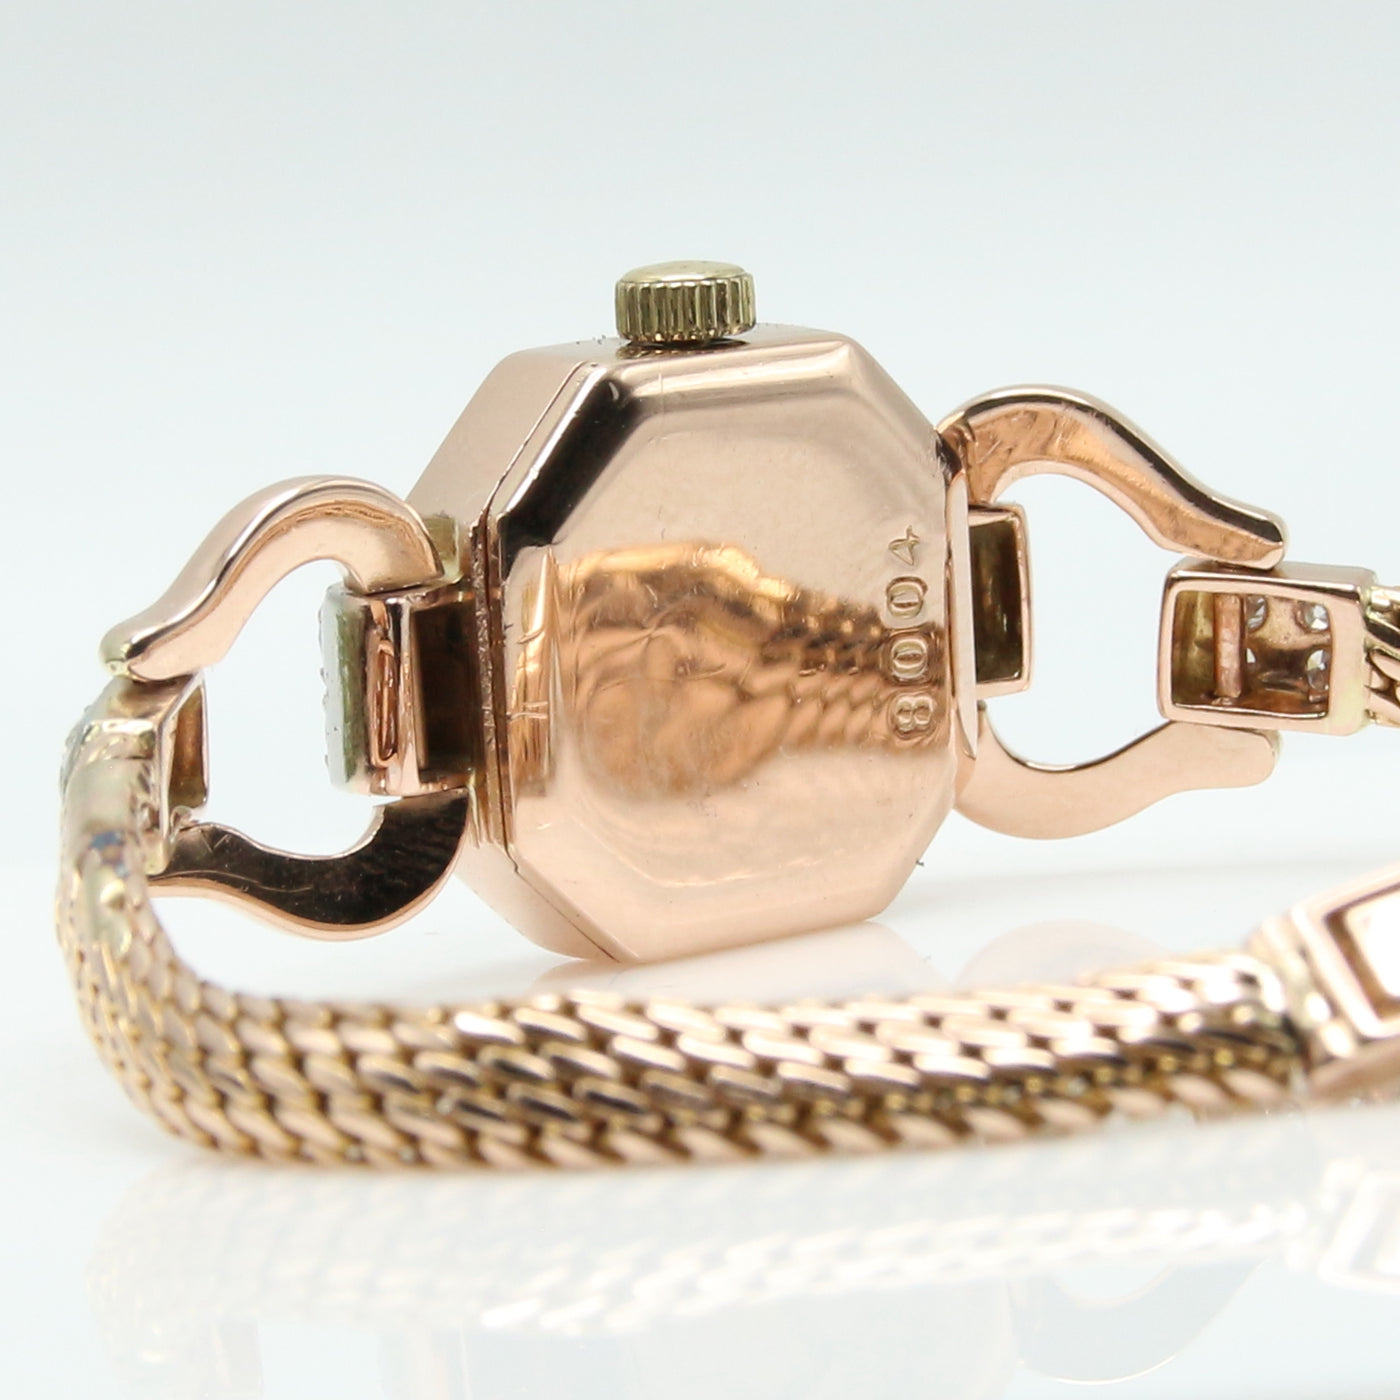 Rose Gold Watch Bracelet